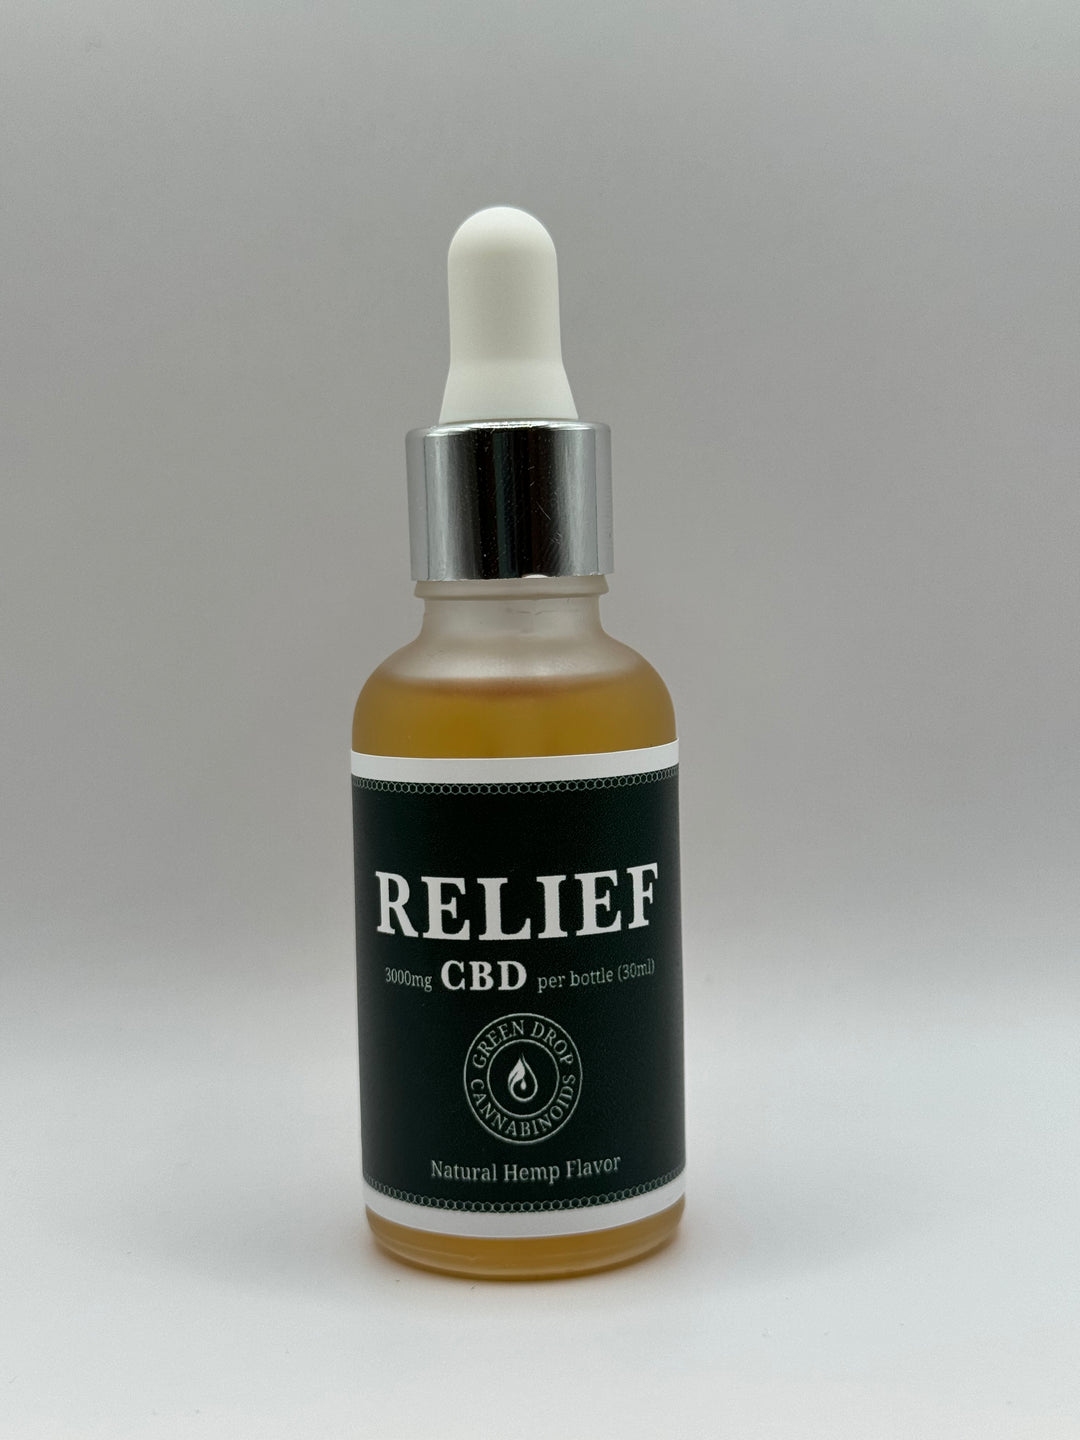 Green Drop Cannnabinoids "Relief" 3000mg Full Spectrum CBD oil